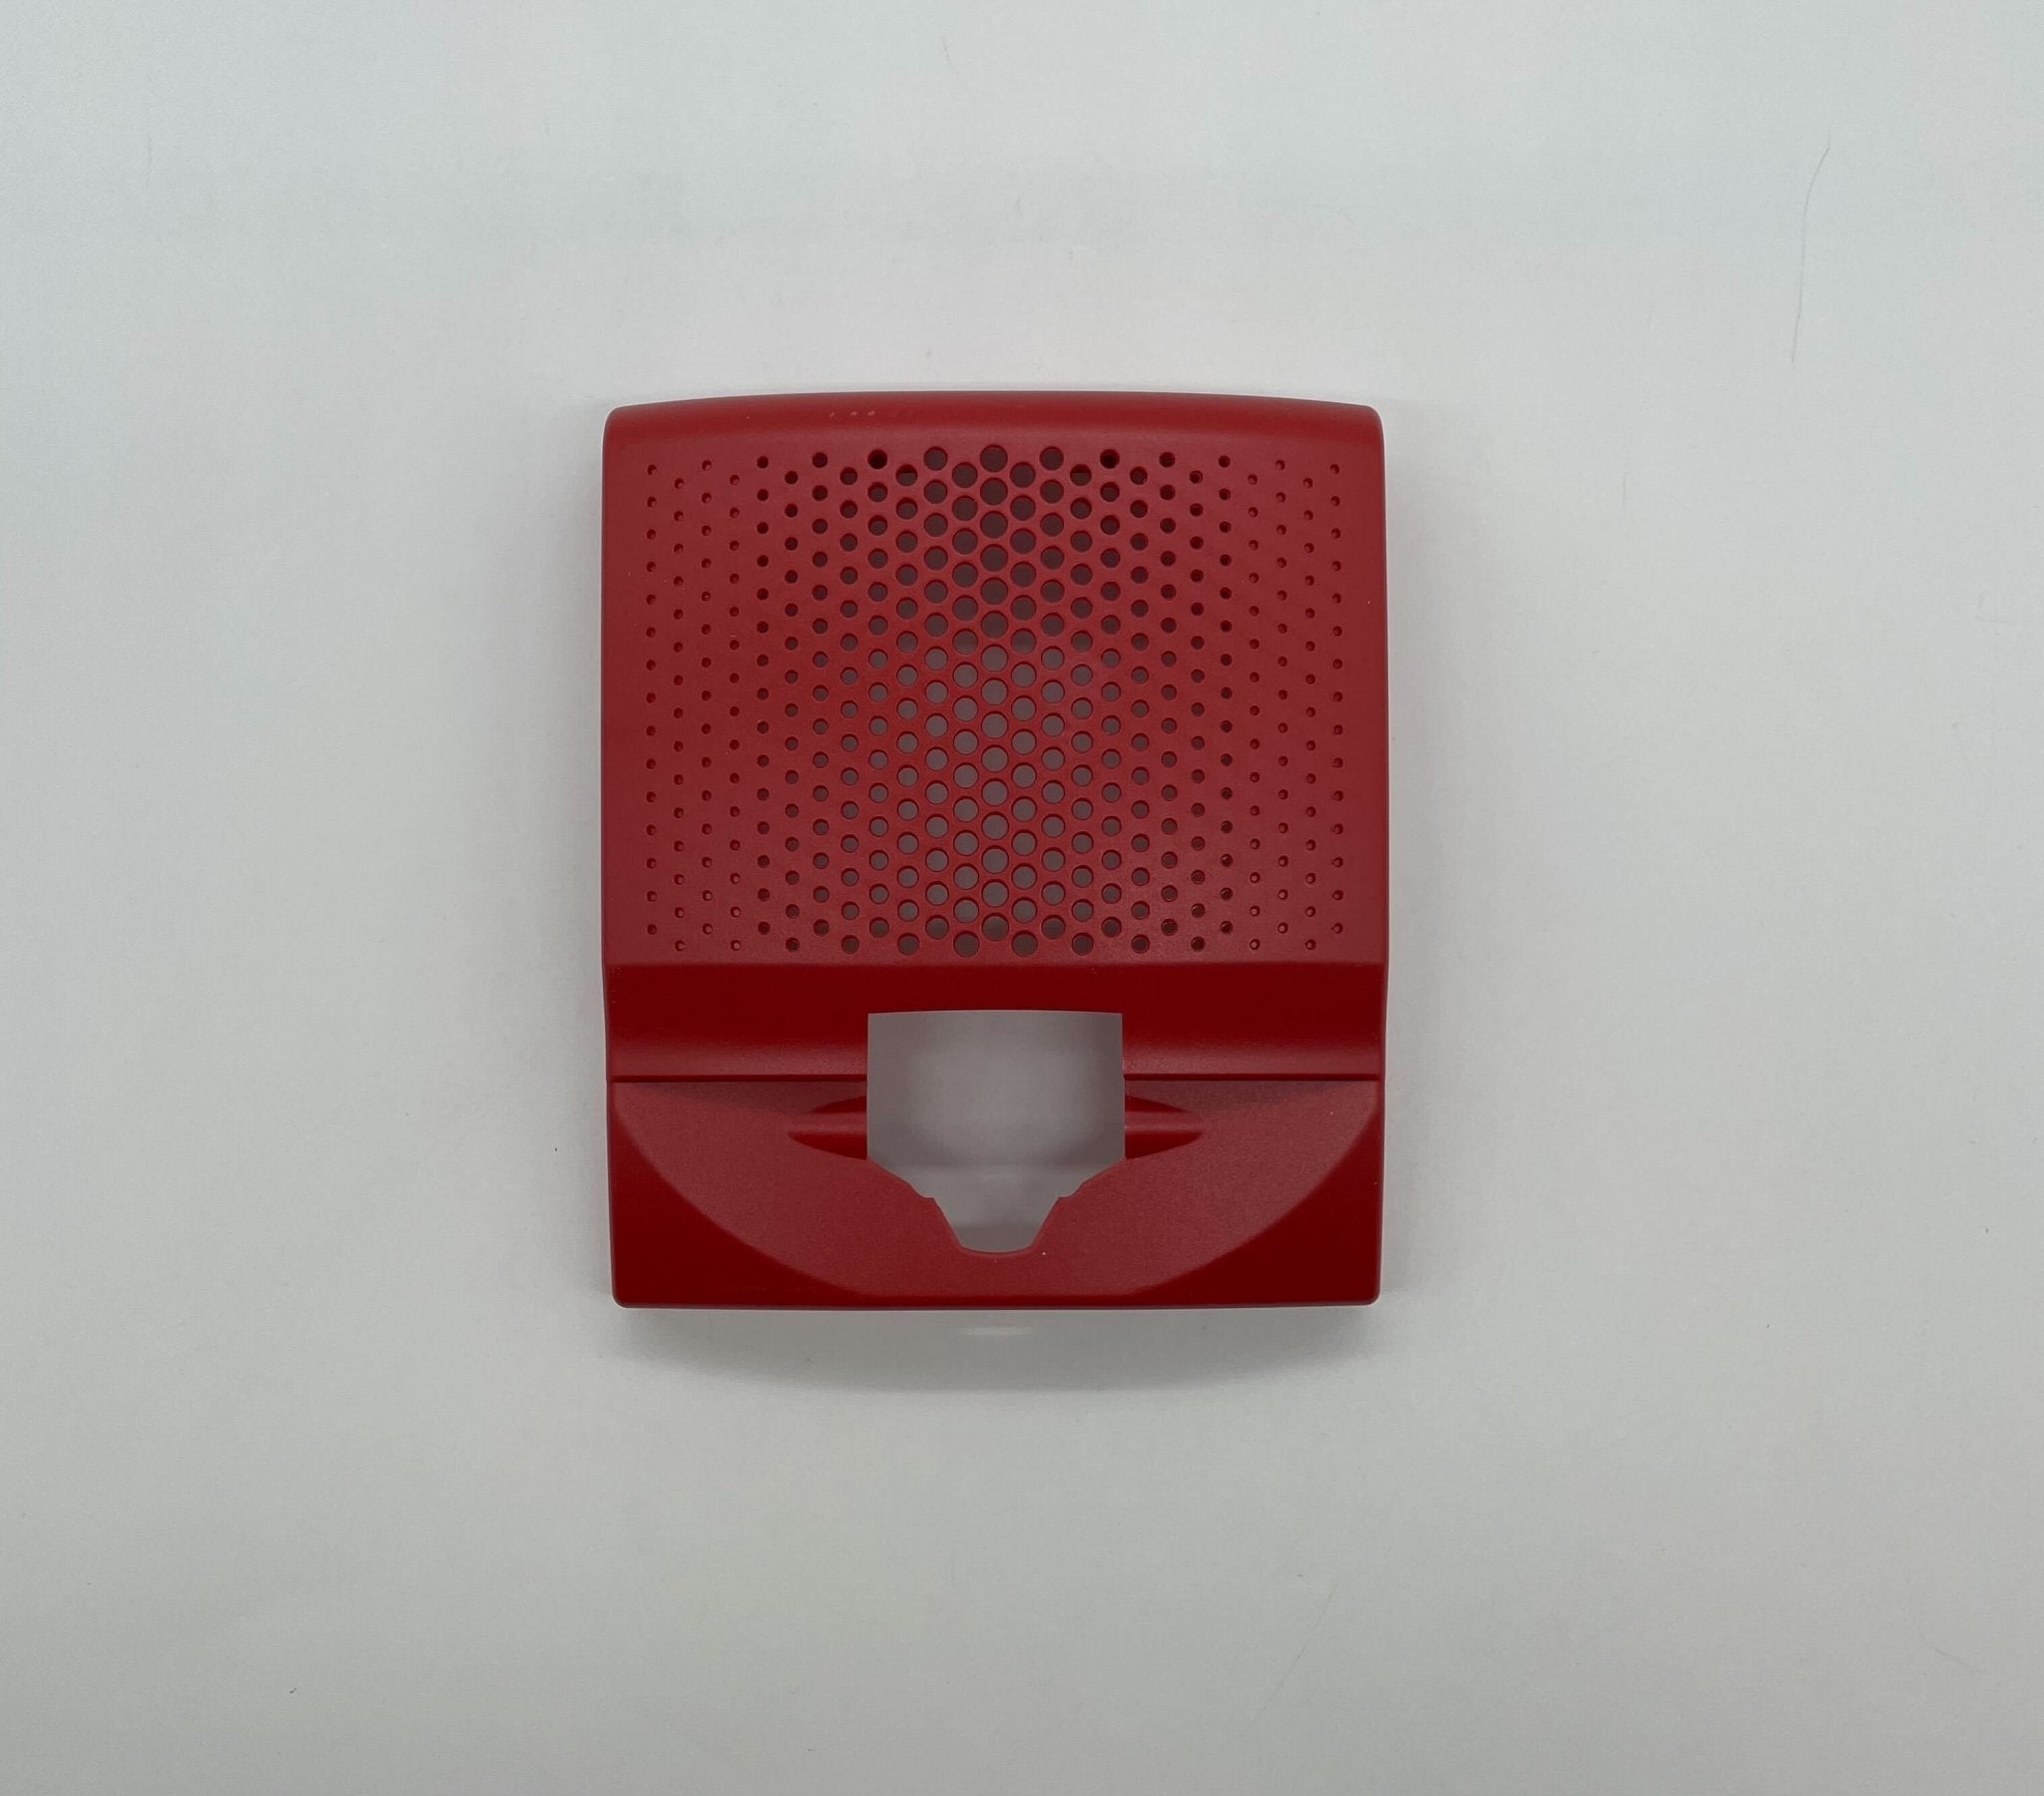 Edwards G4AVRF-CVR Horn-Strobe Cover, Red, “FIRE” Marking - The Fire Alarm Supplier